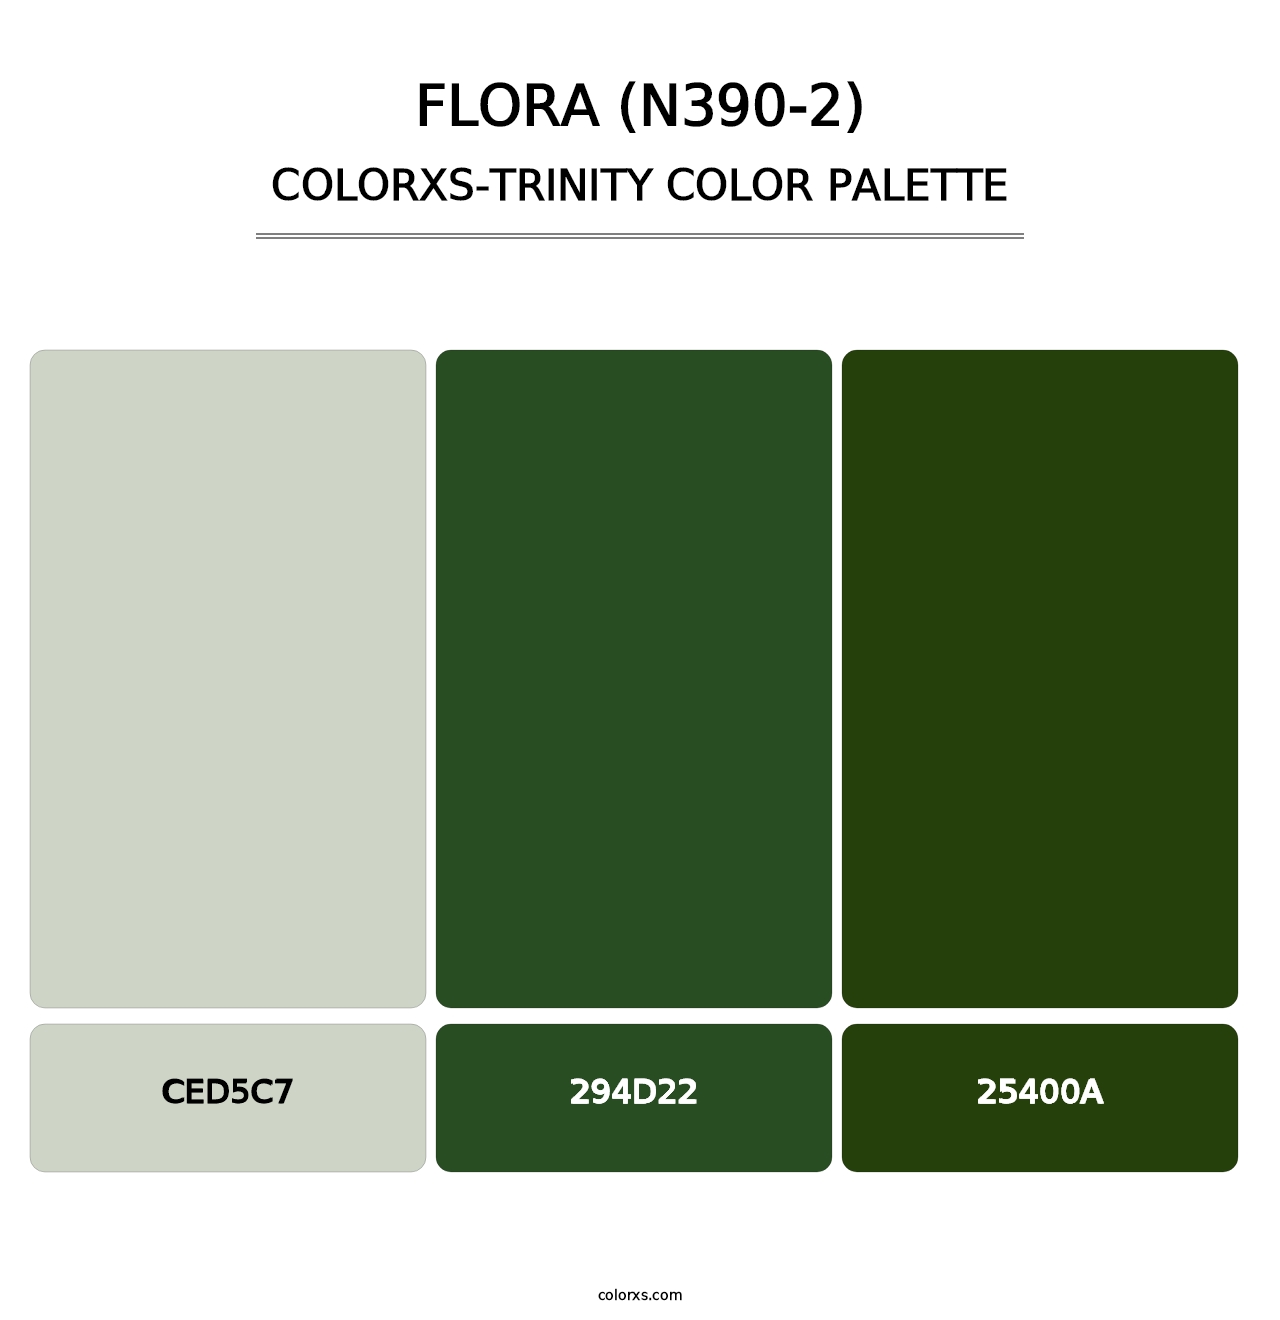 Flora (N390-2) - Colorxs Trinity Palette